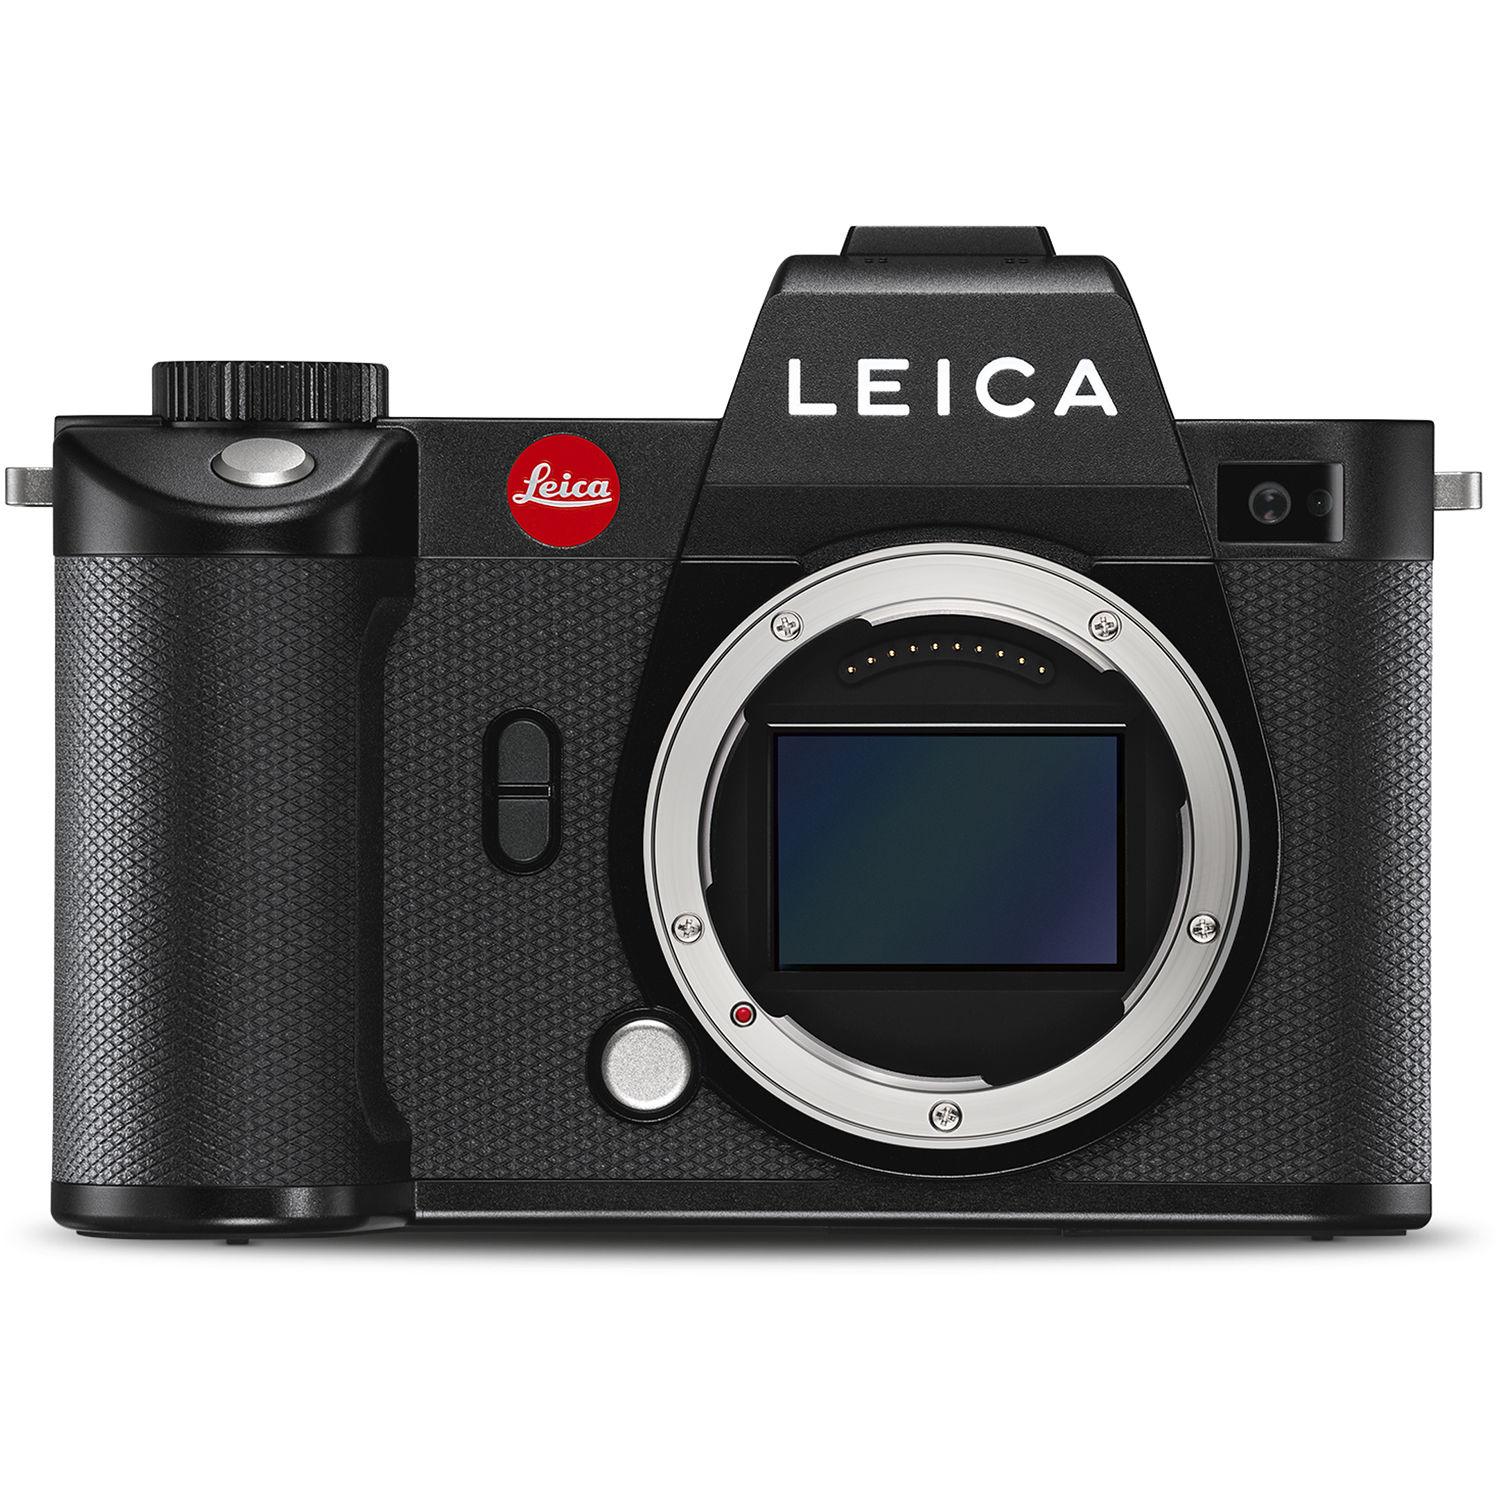 Leica SL2 camera manual download